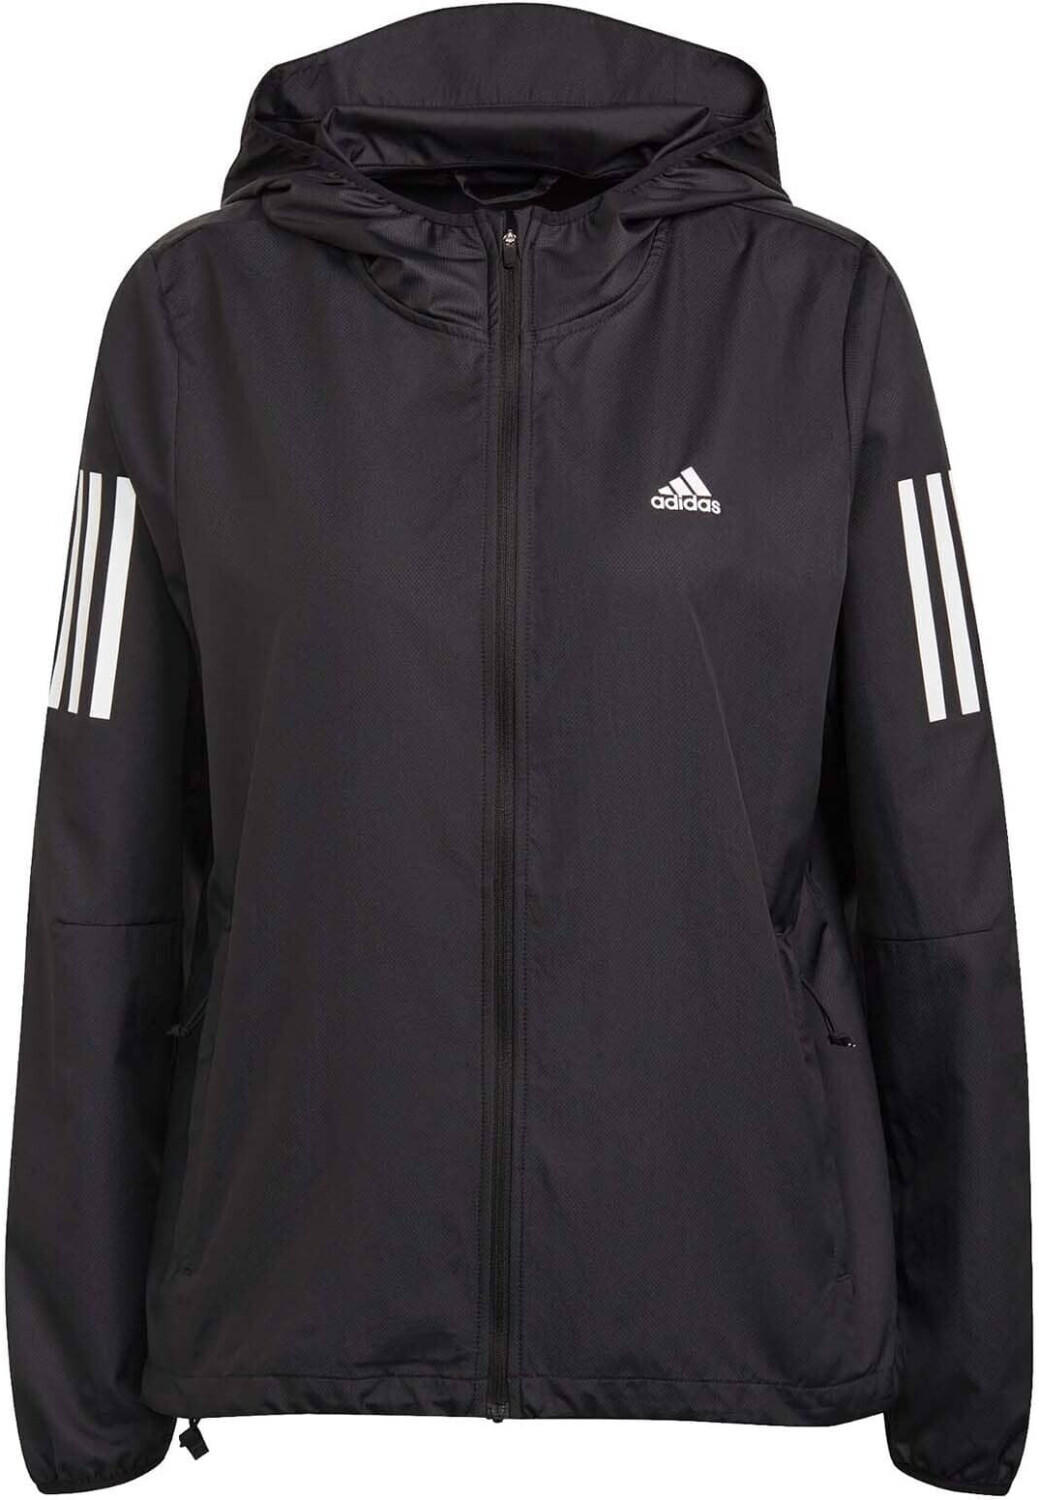 Adidas Running Jacket ab € - black 43,97 Windbreaker Test